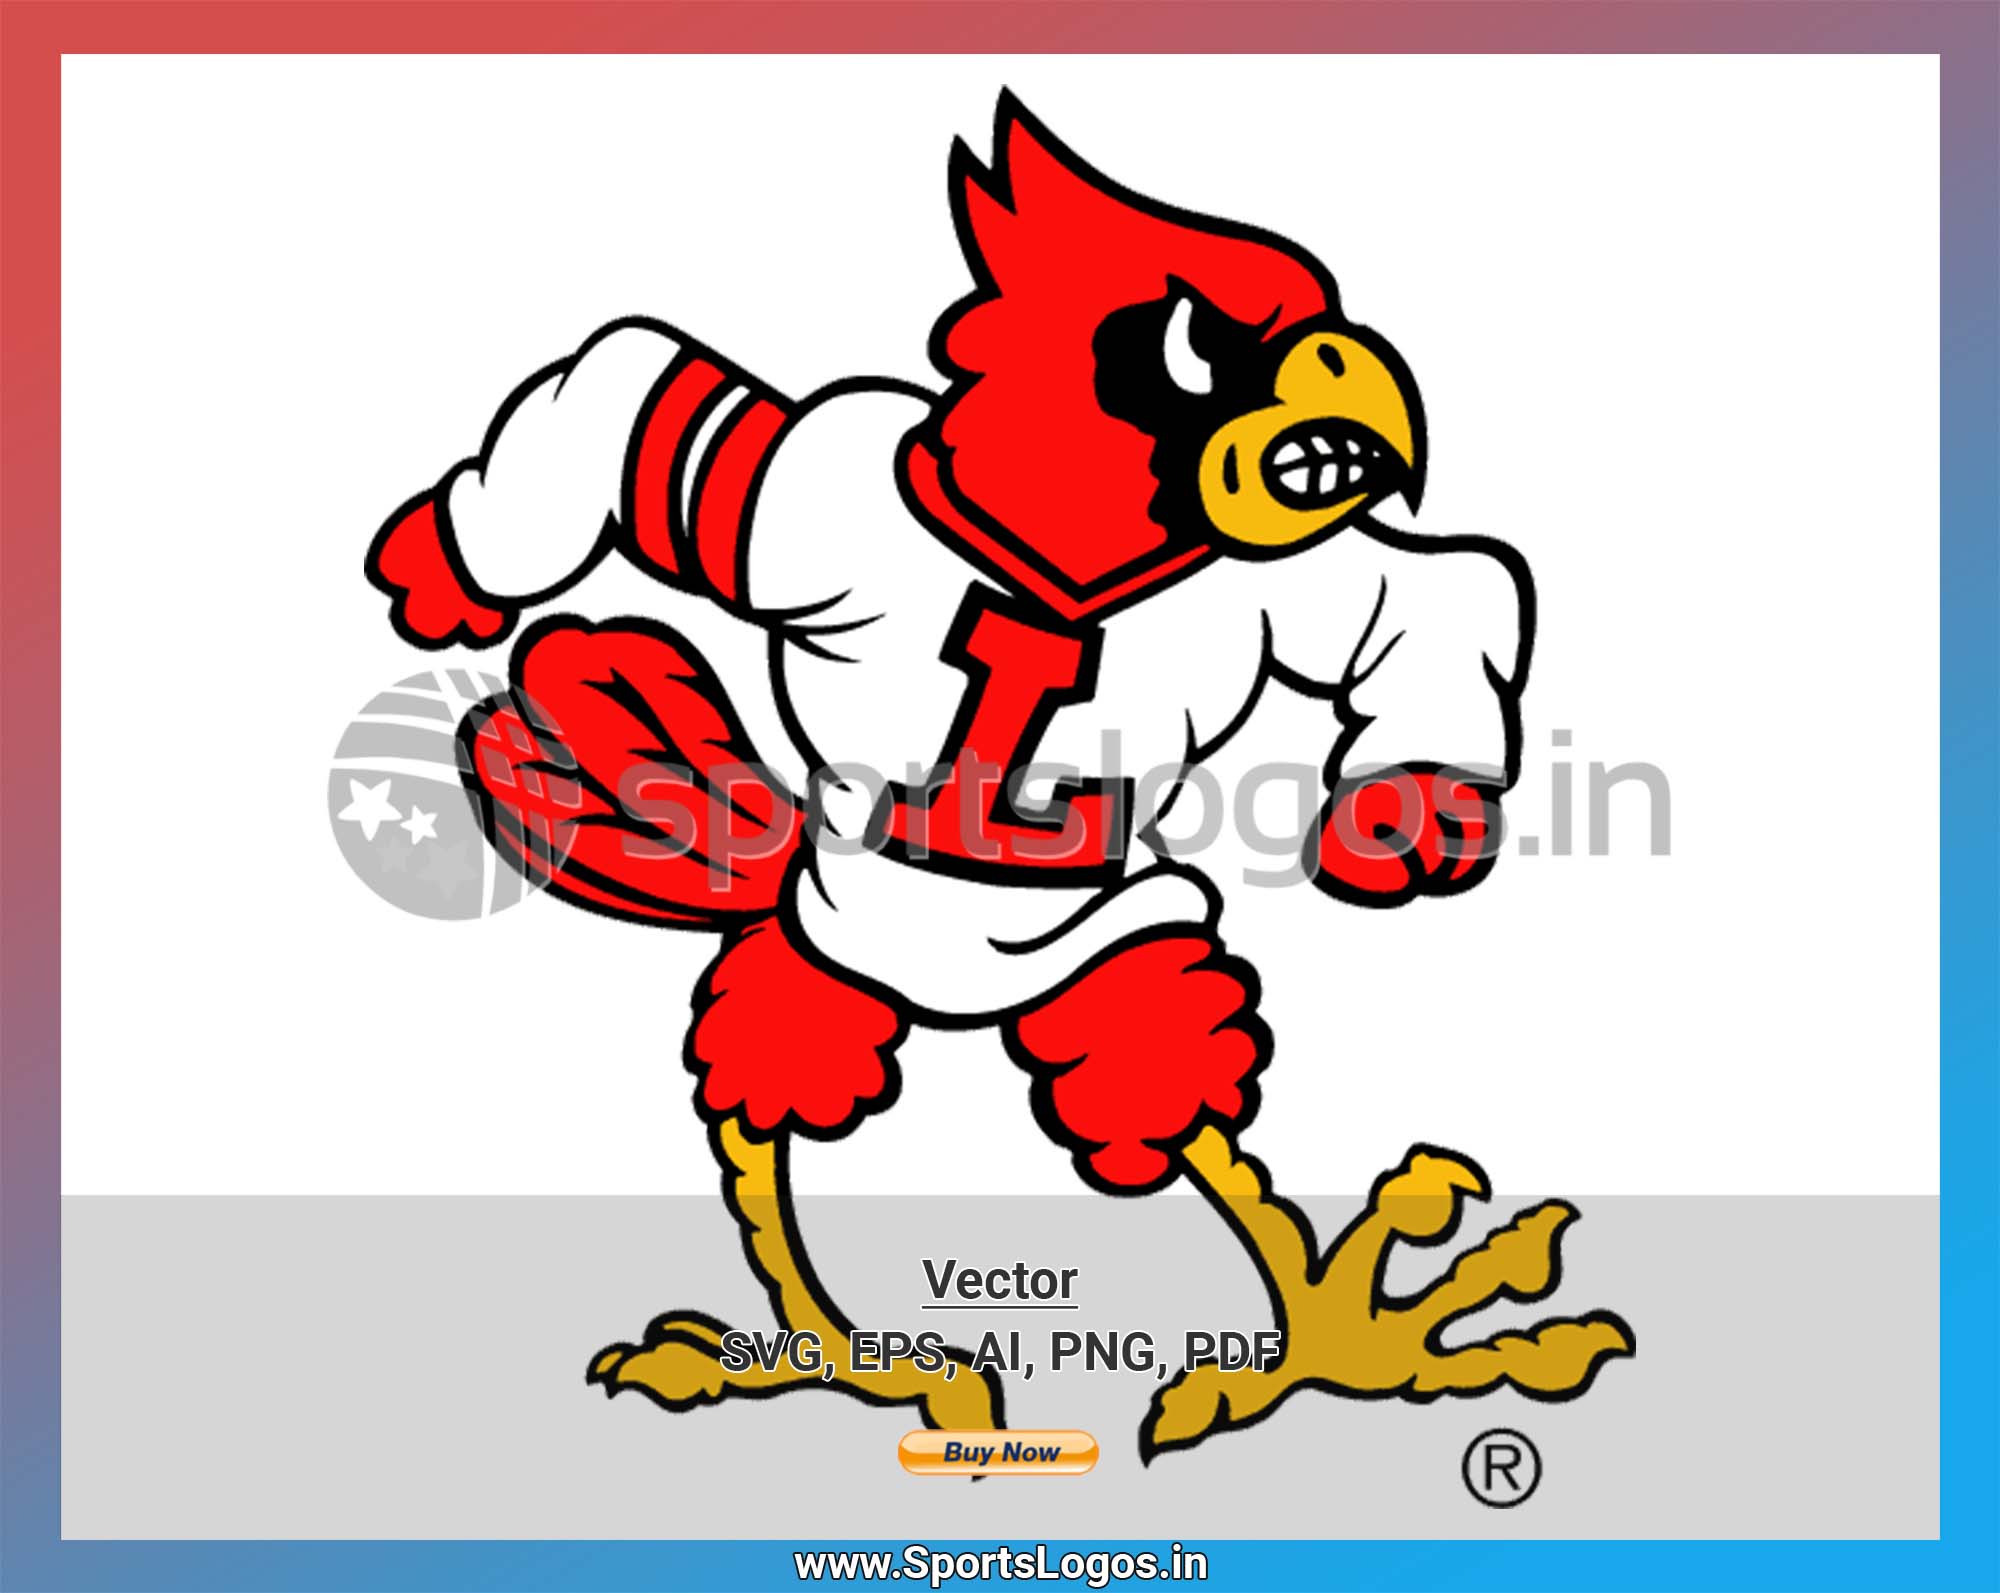 University of Louisville - College Teams - Logo Series - Product Categories